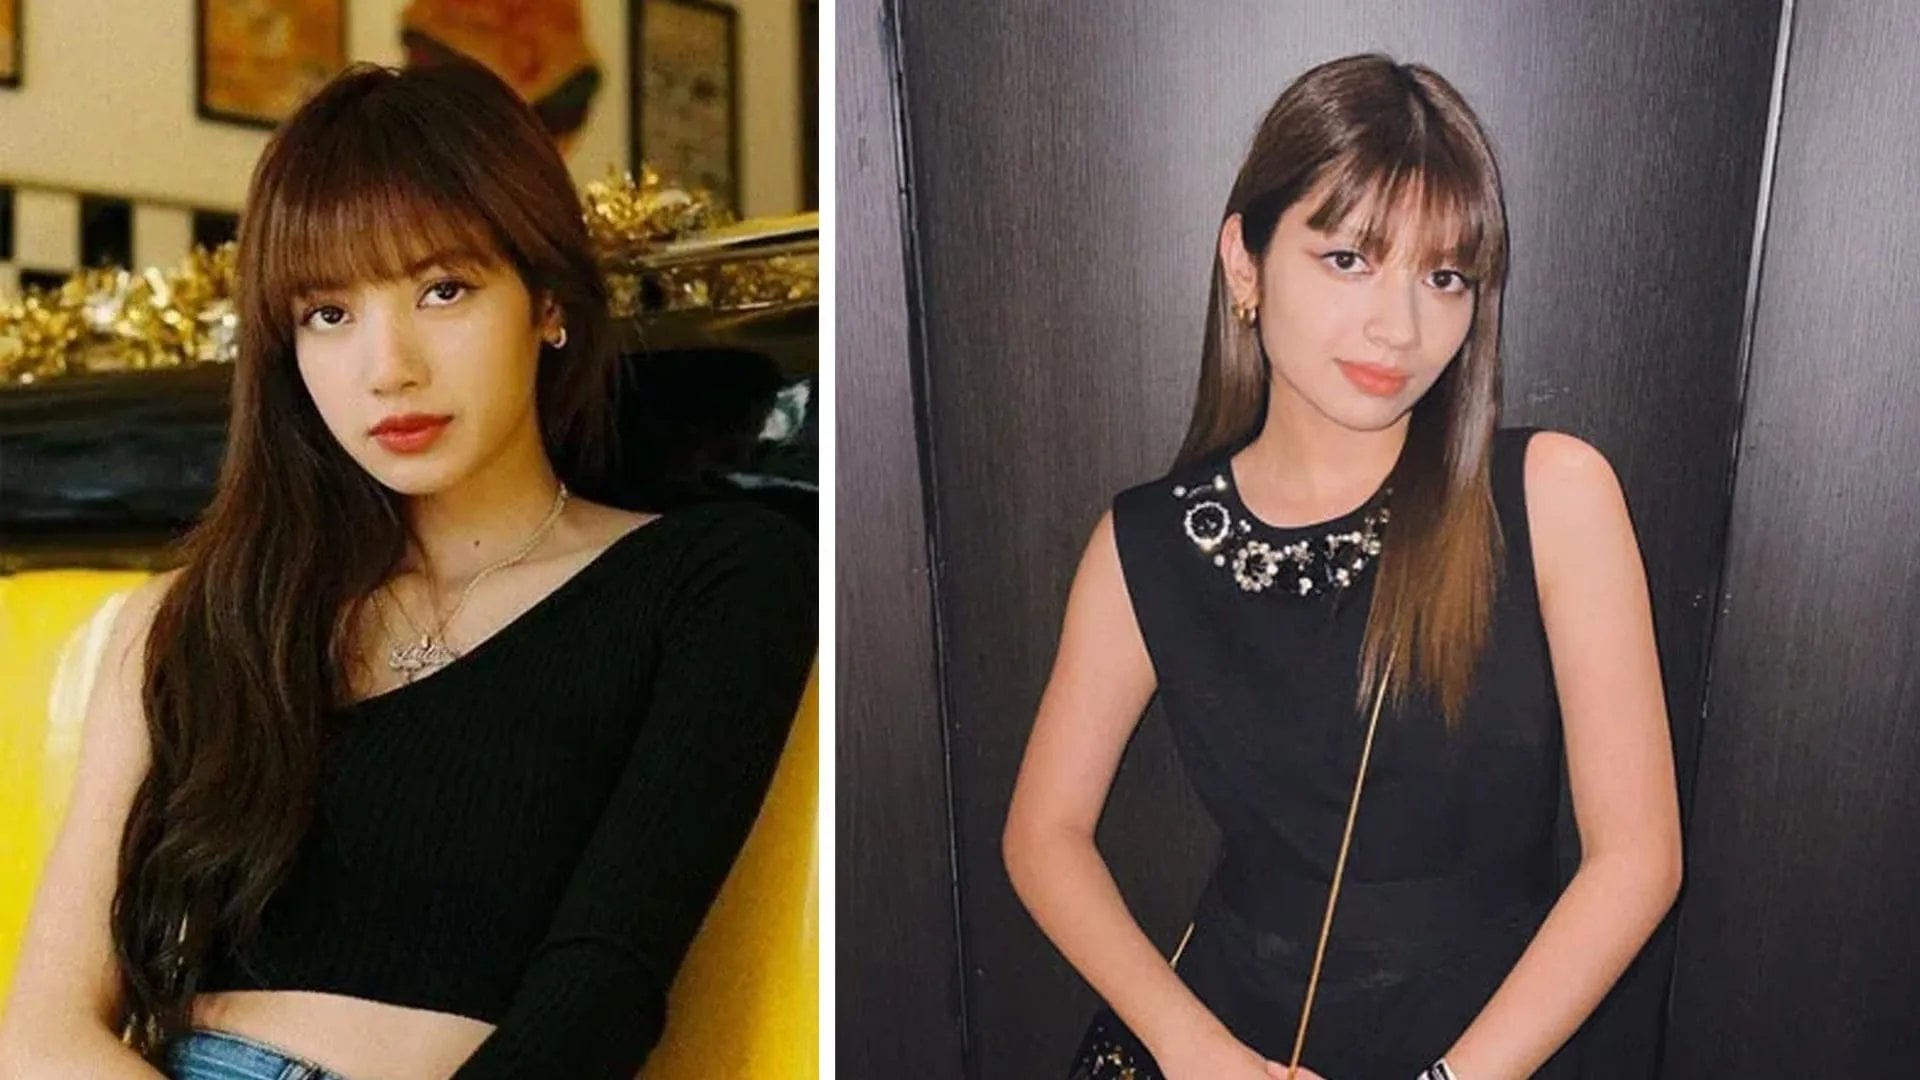 231017 Blackpink Lisa look-alike Malaysian Singer faces online harassment